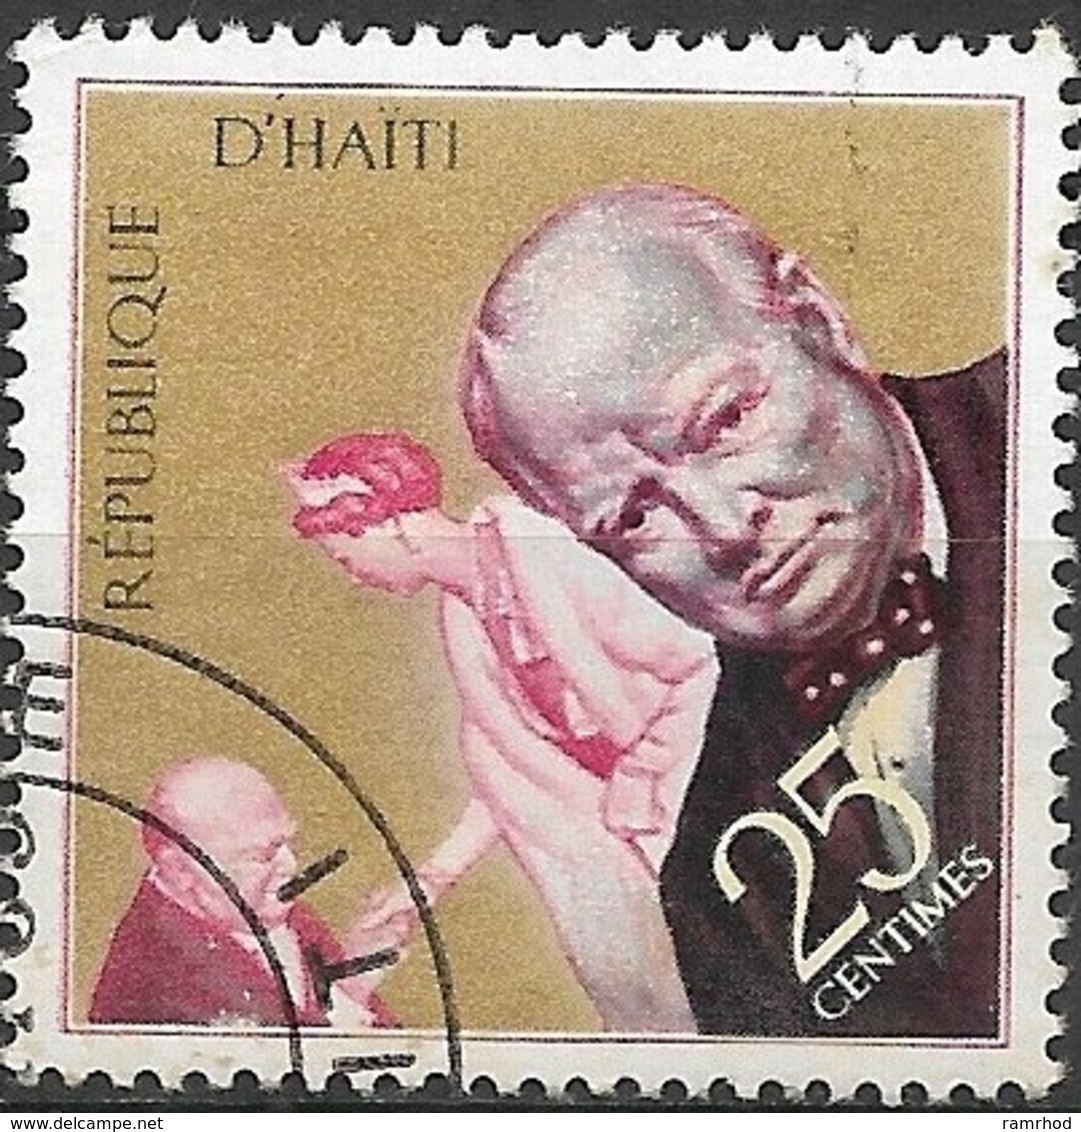 HAITI 1968 Churchill Commemoration - 25c - Karsh Portrait And Taking Leave Of The Queen FU - Haiti